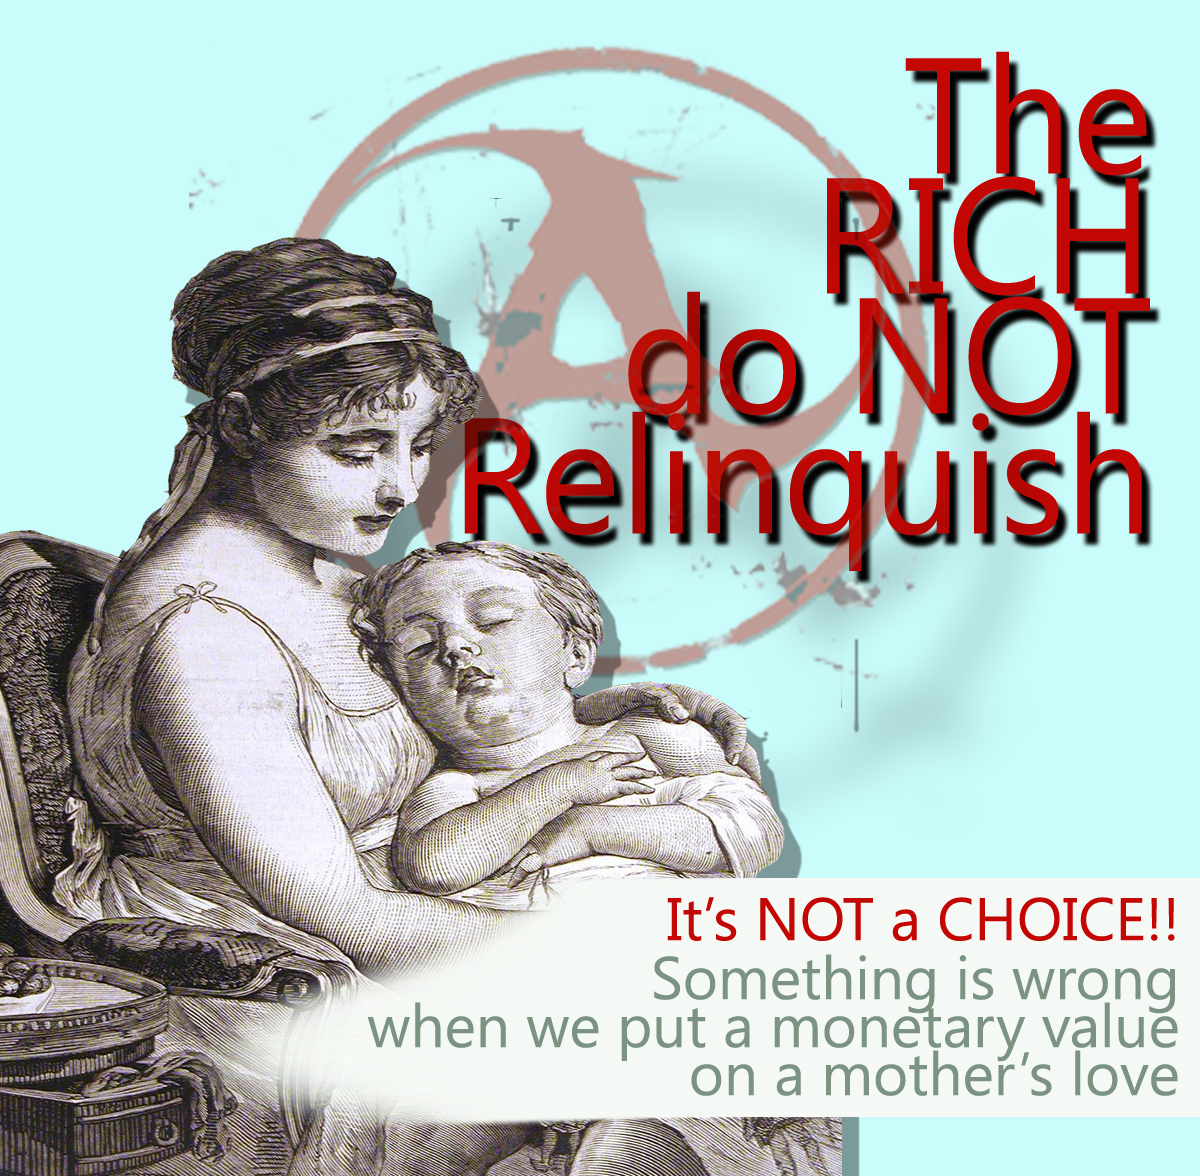 The rich do not relinquish their children to adoption